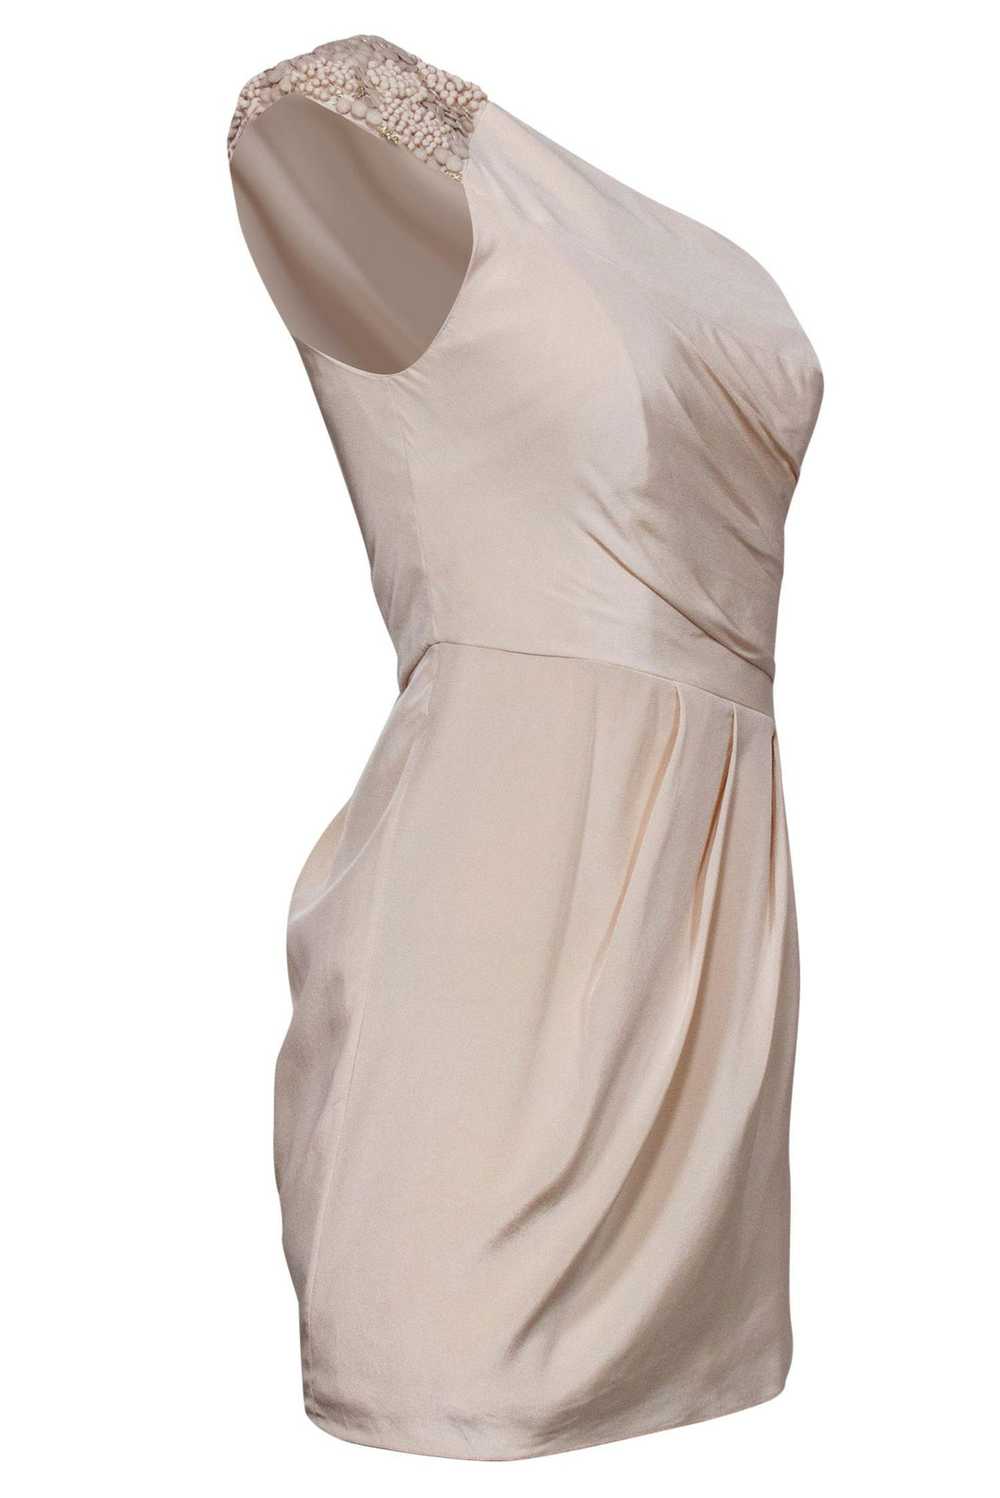 Tibi - Cream Satin One-Shoulder Beaded Dress Sz 4 - image 2